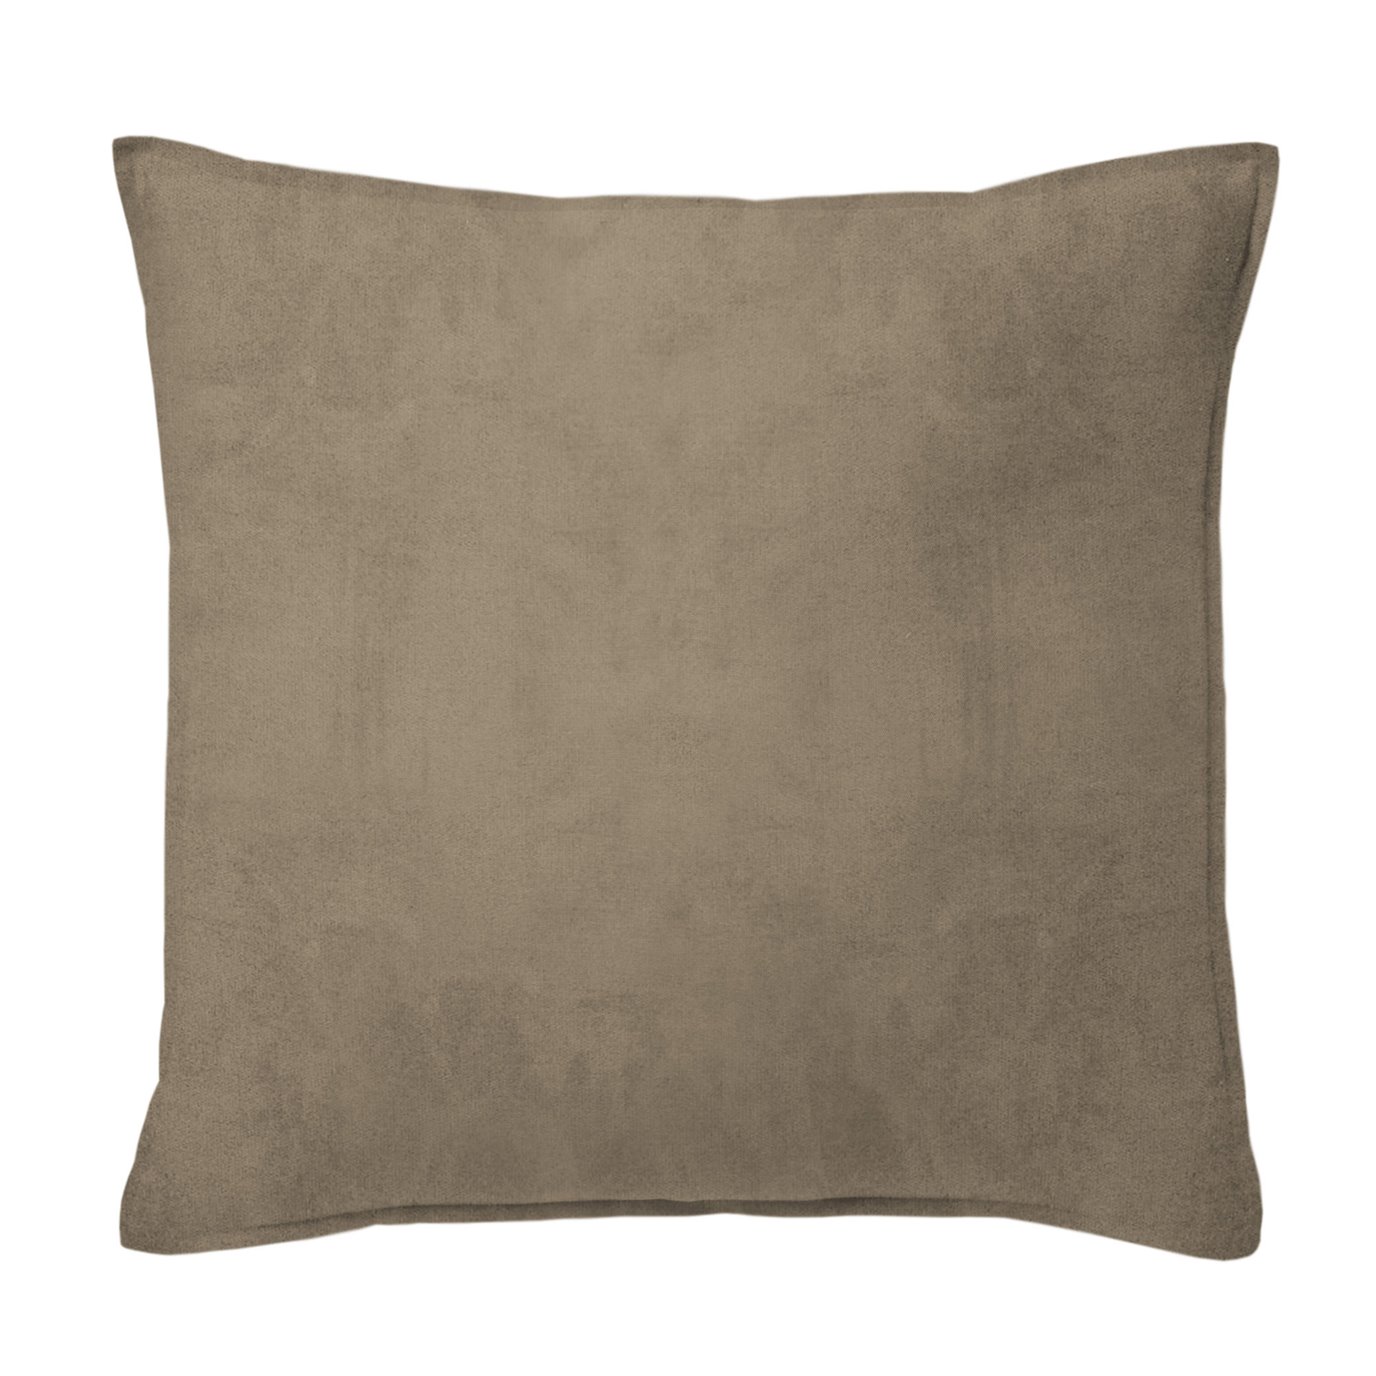 Vanessa Sable Decorative Pillow - Size 20" Square